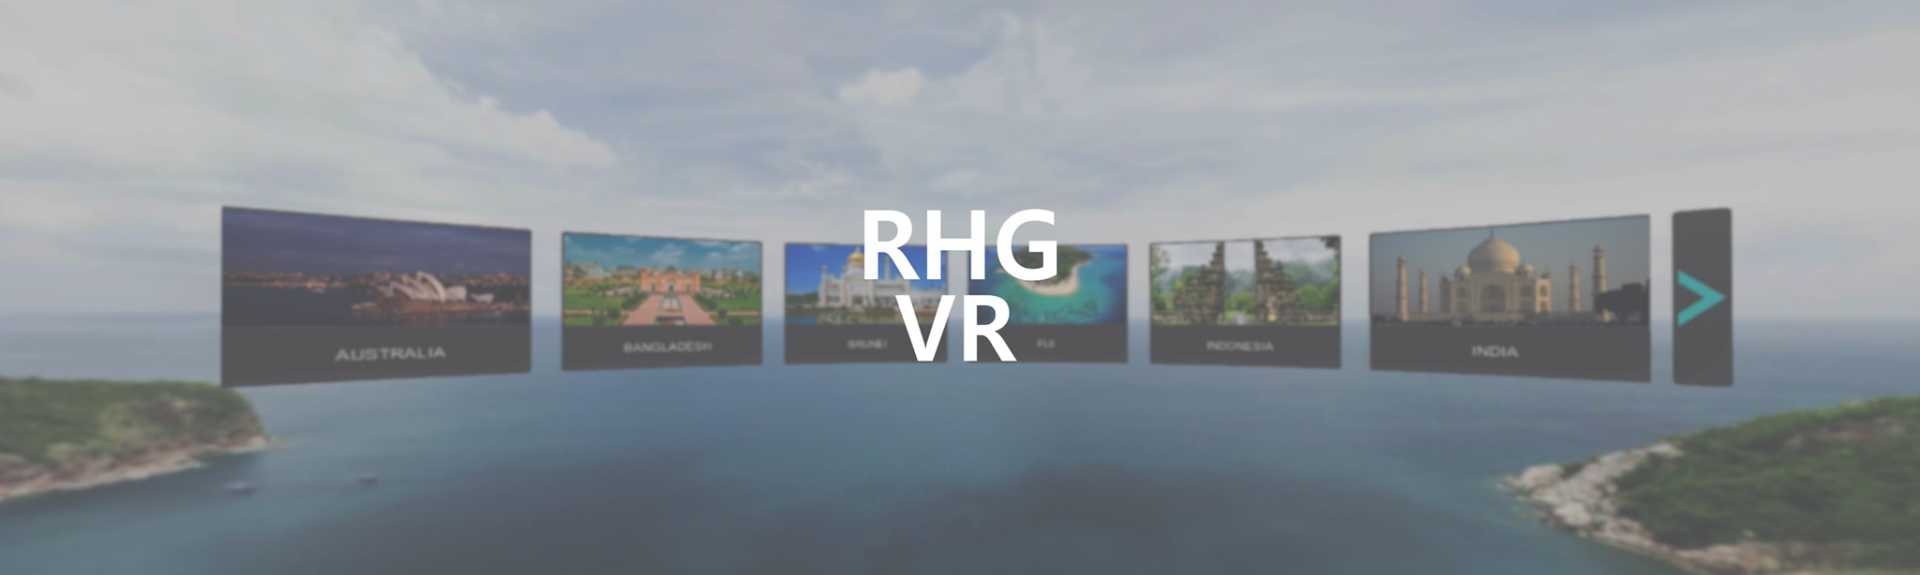 RHG VR